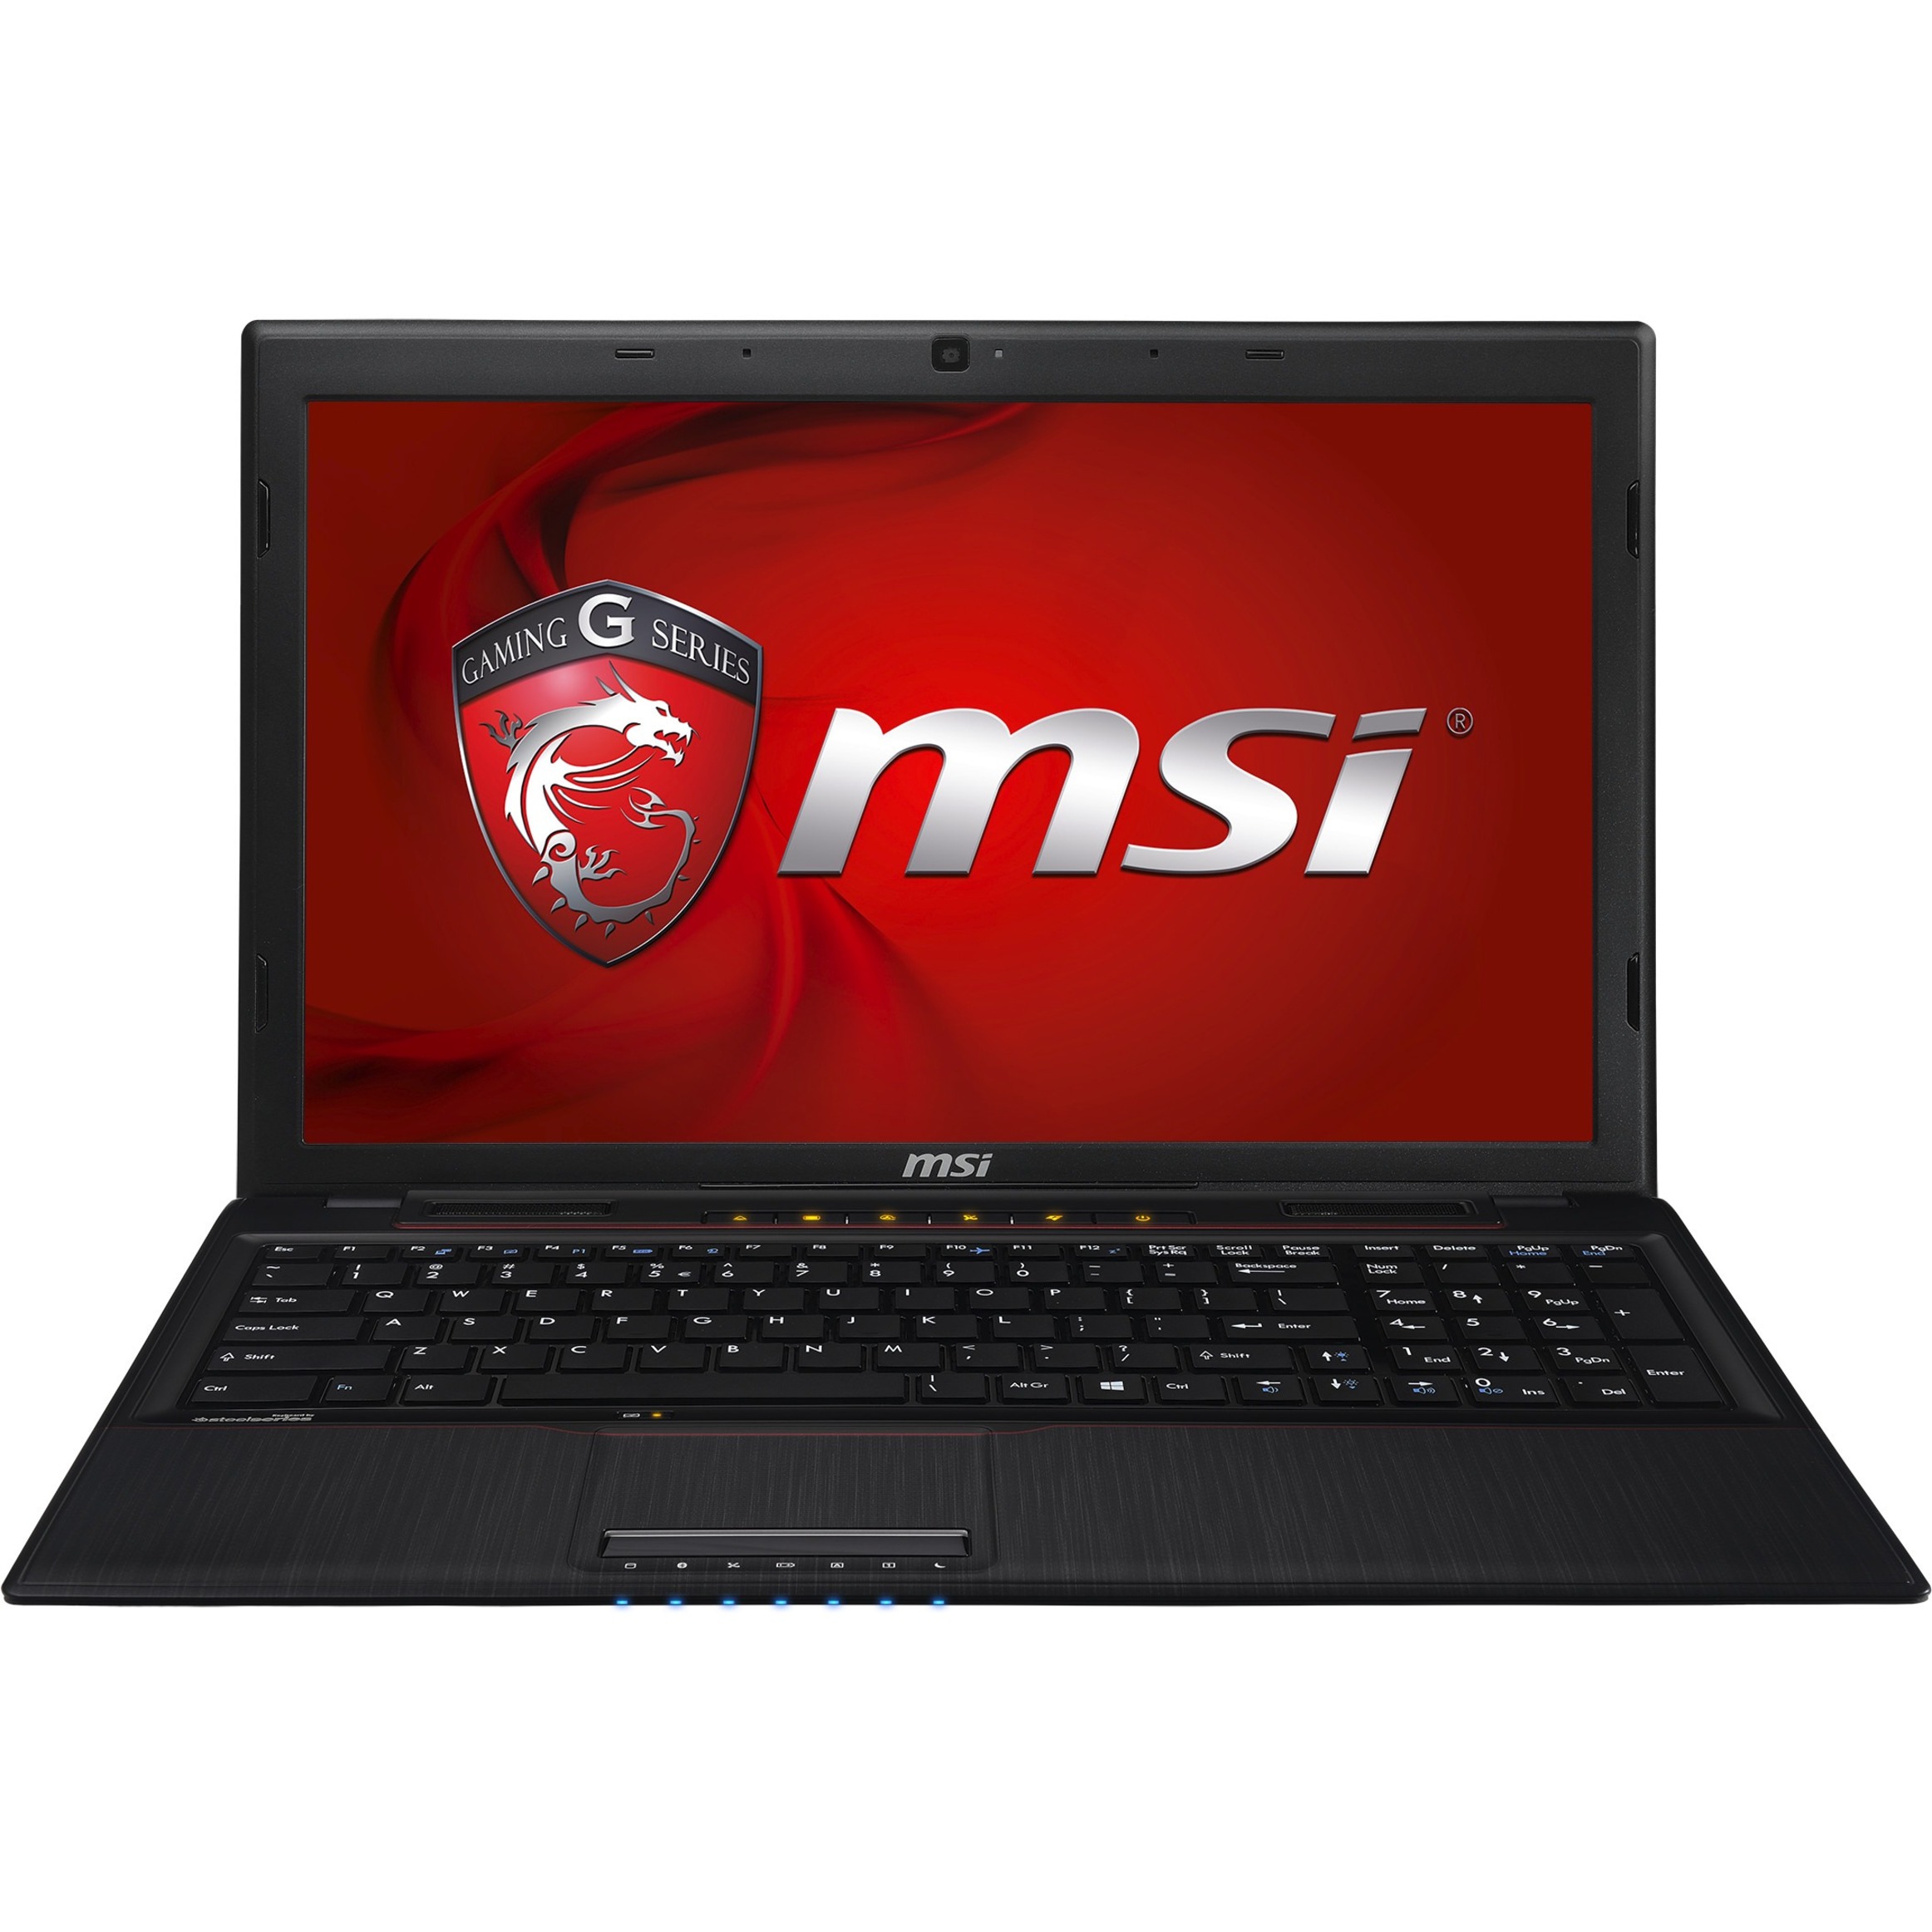 MSI 15.6" Full HD Gaming Laptop, Intel Core i7 i7-4710HQ, NVIDIA GeForce GT 840M 2 GB, 1TB HD, DVD Writer, Windows 8.1, GP60 Leopard-472 - image 1 of 7